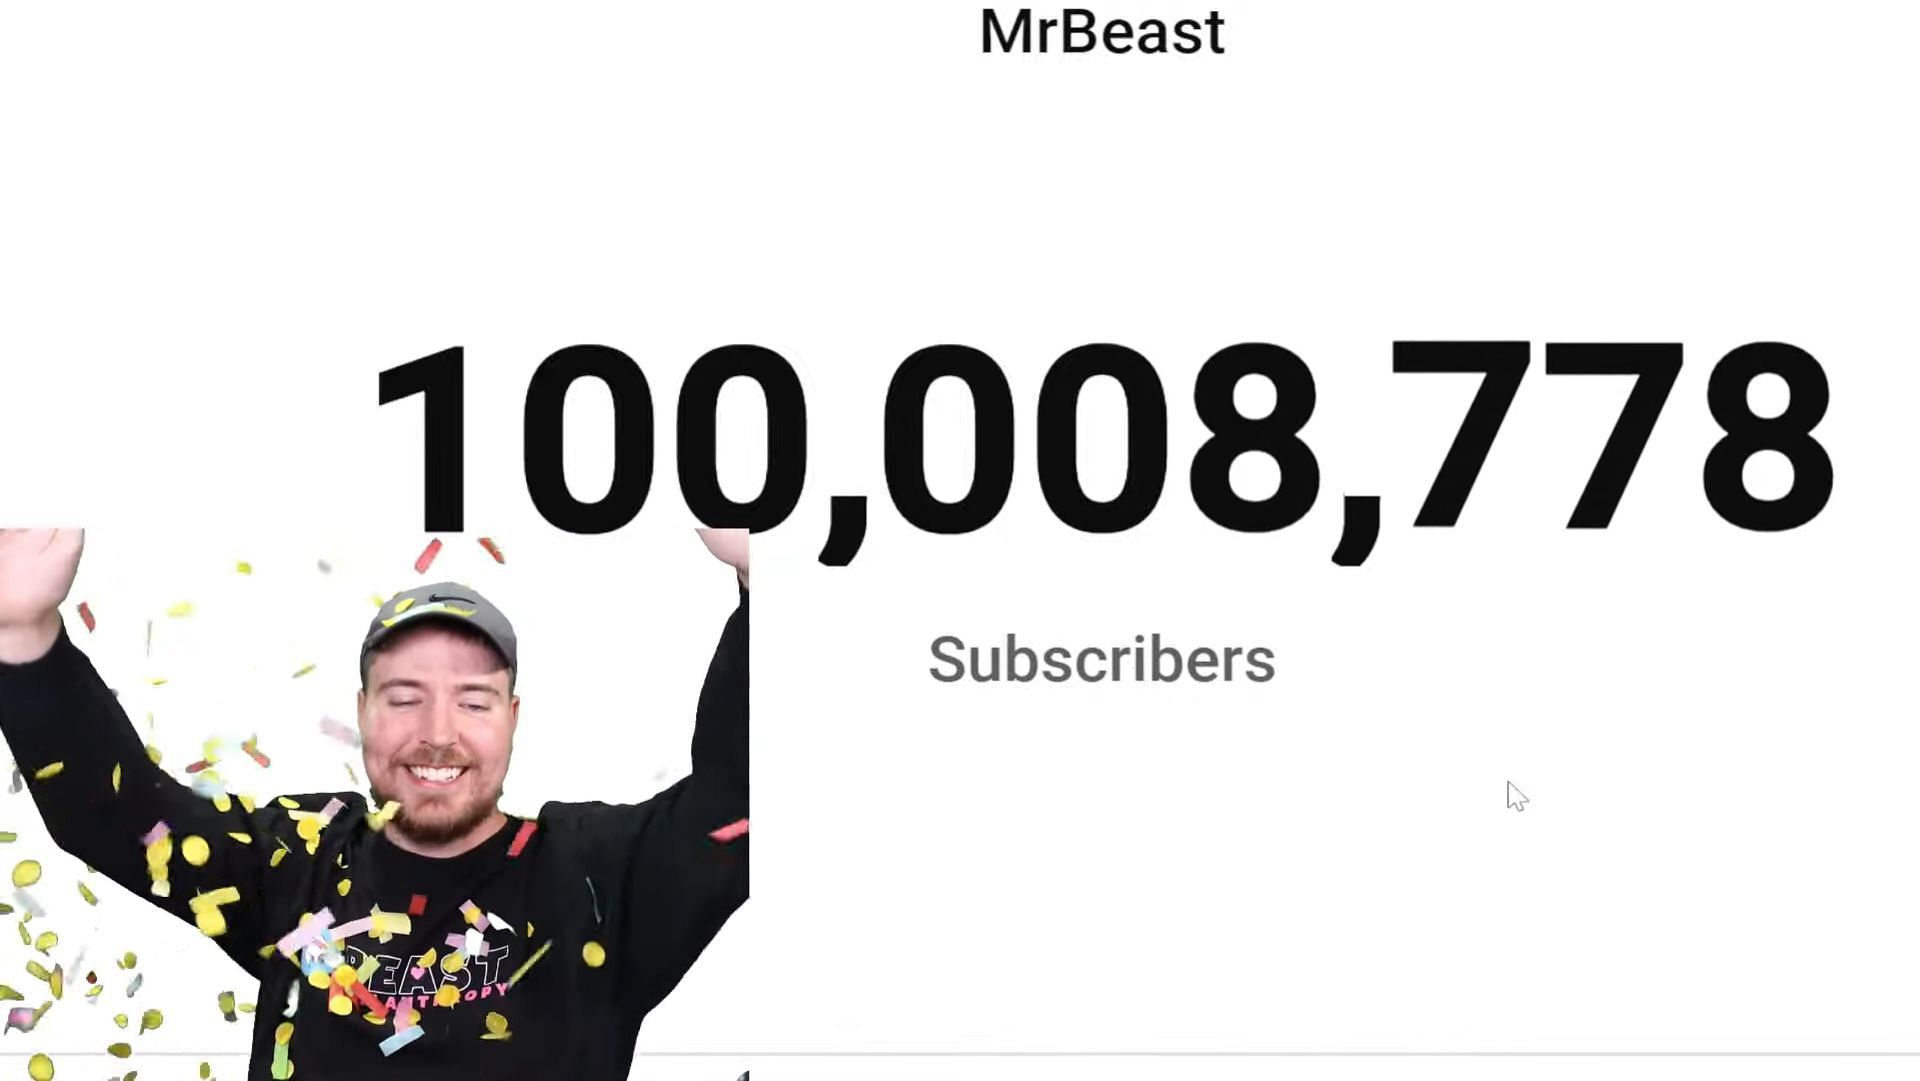 Jimmy crosses 100 million subscribers on YouTube (Image via MrBeast/YouTube)